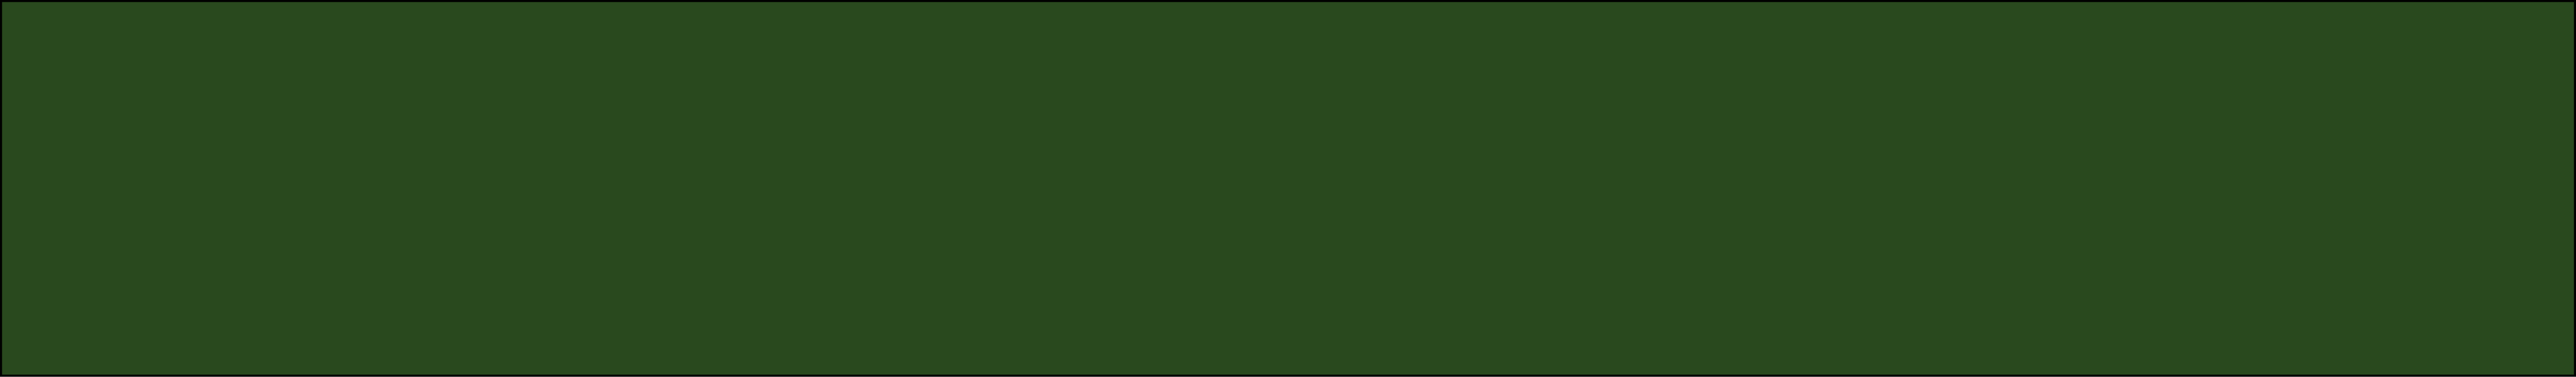 Casella Solid Green Header Image